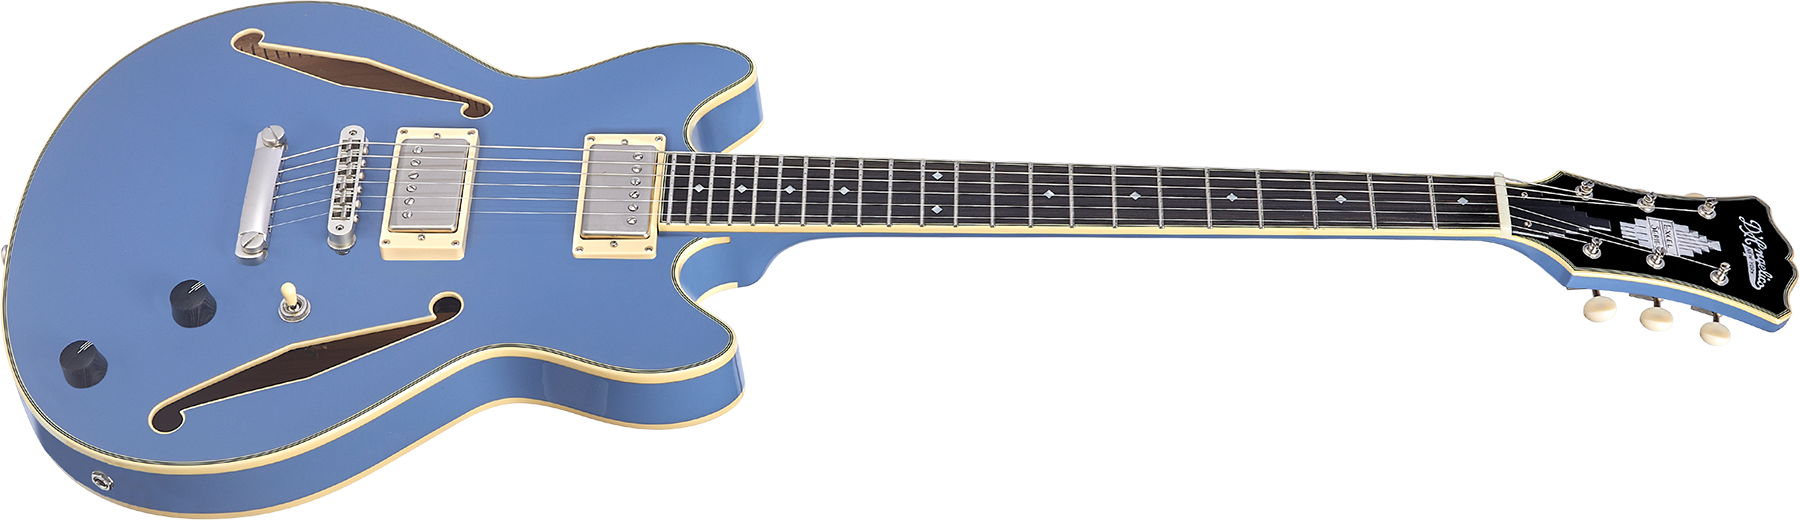 D'angelico Mini Dc Tour Excel 2h Ht Eb - Slate Blue - Semi-hollow electric guitar - Variation 1